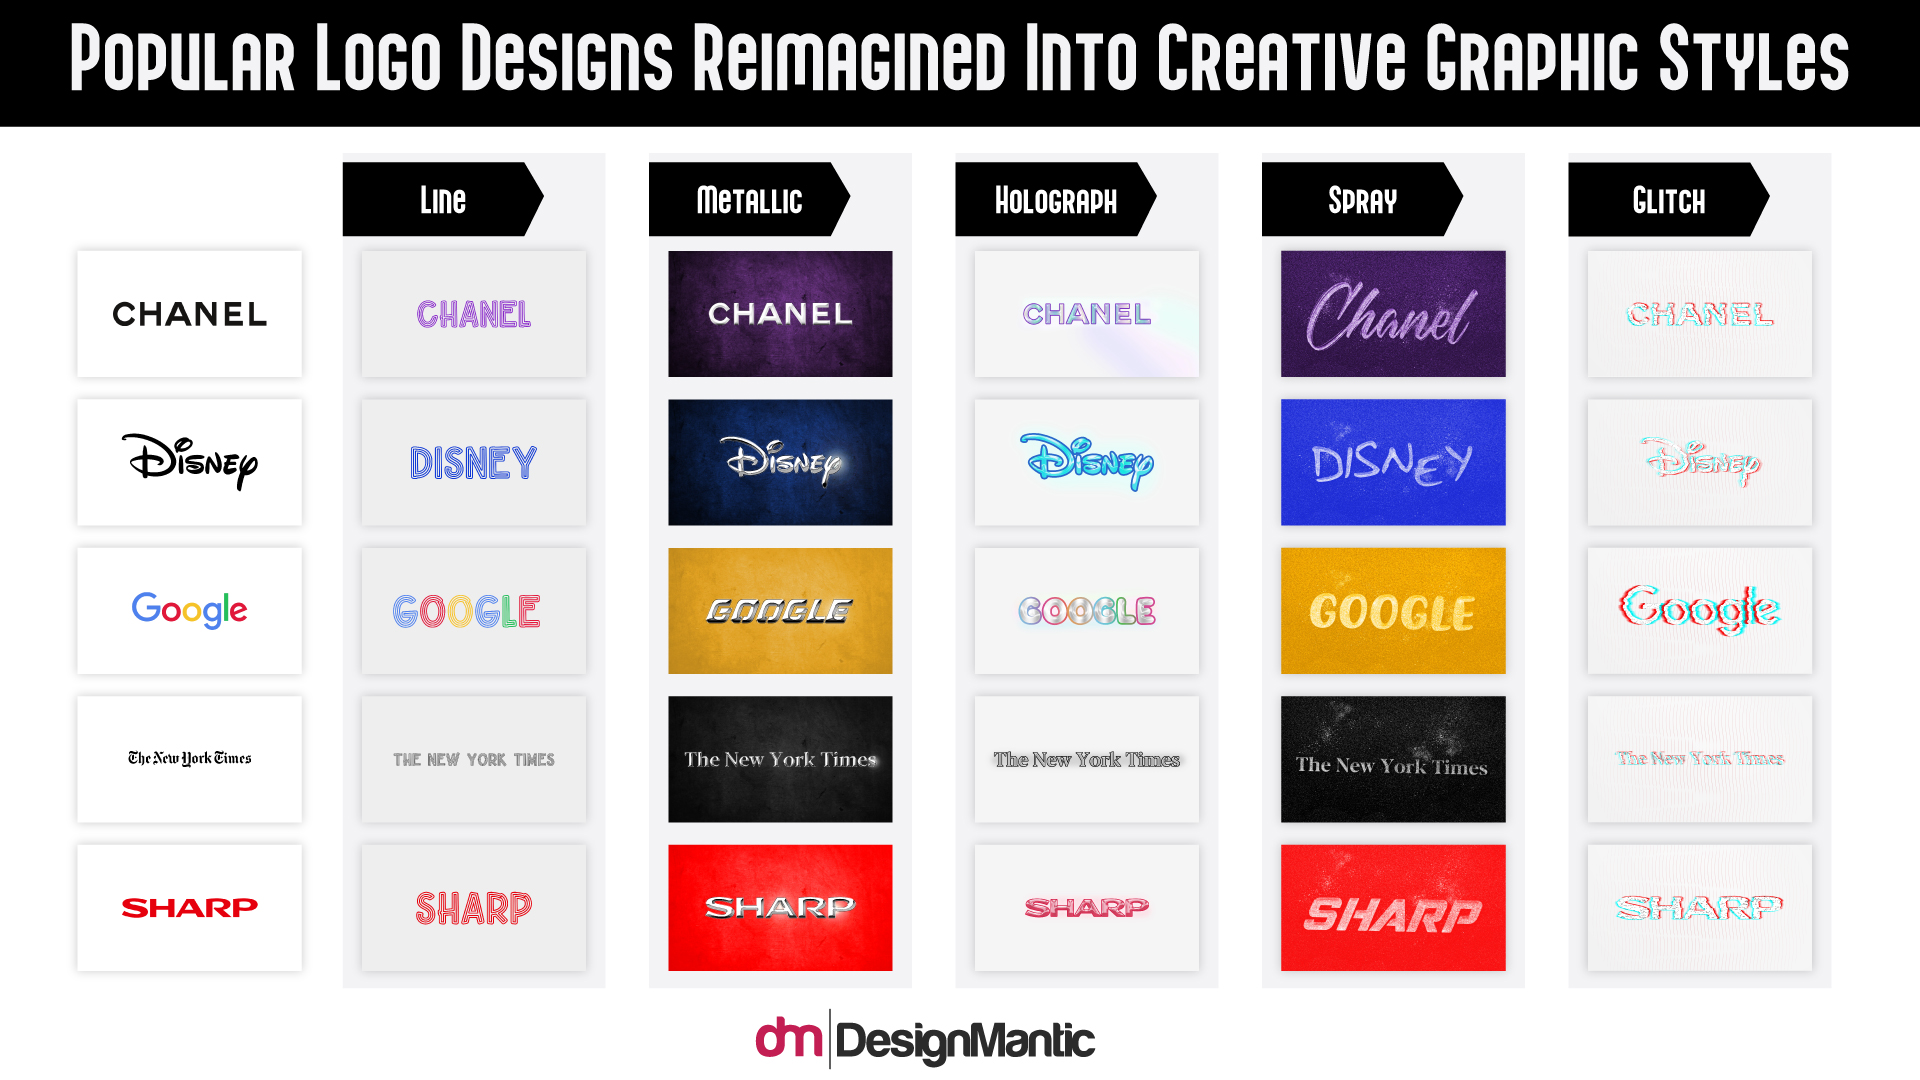 Creative Graphic Styles